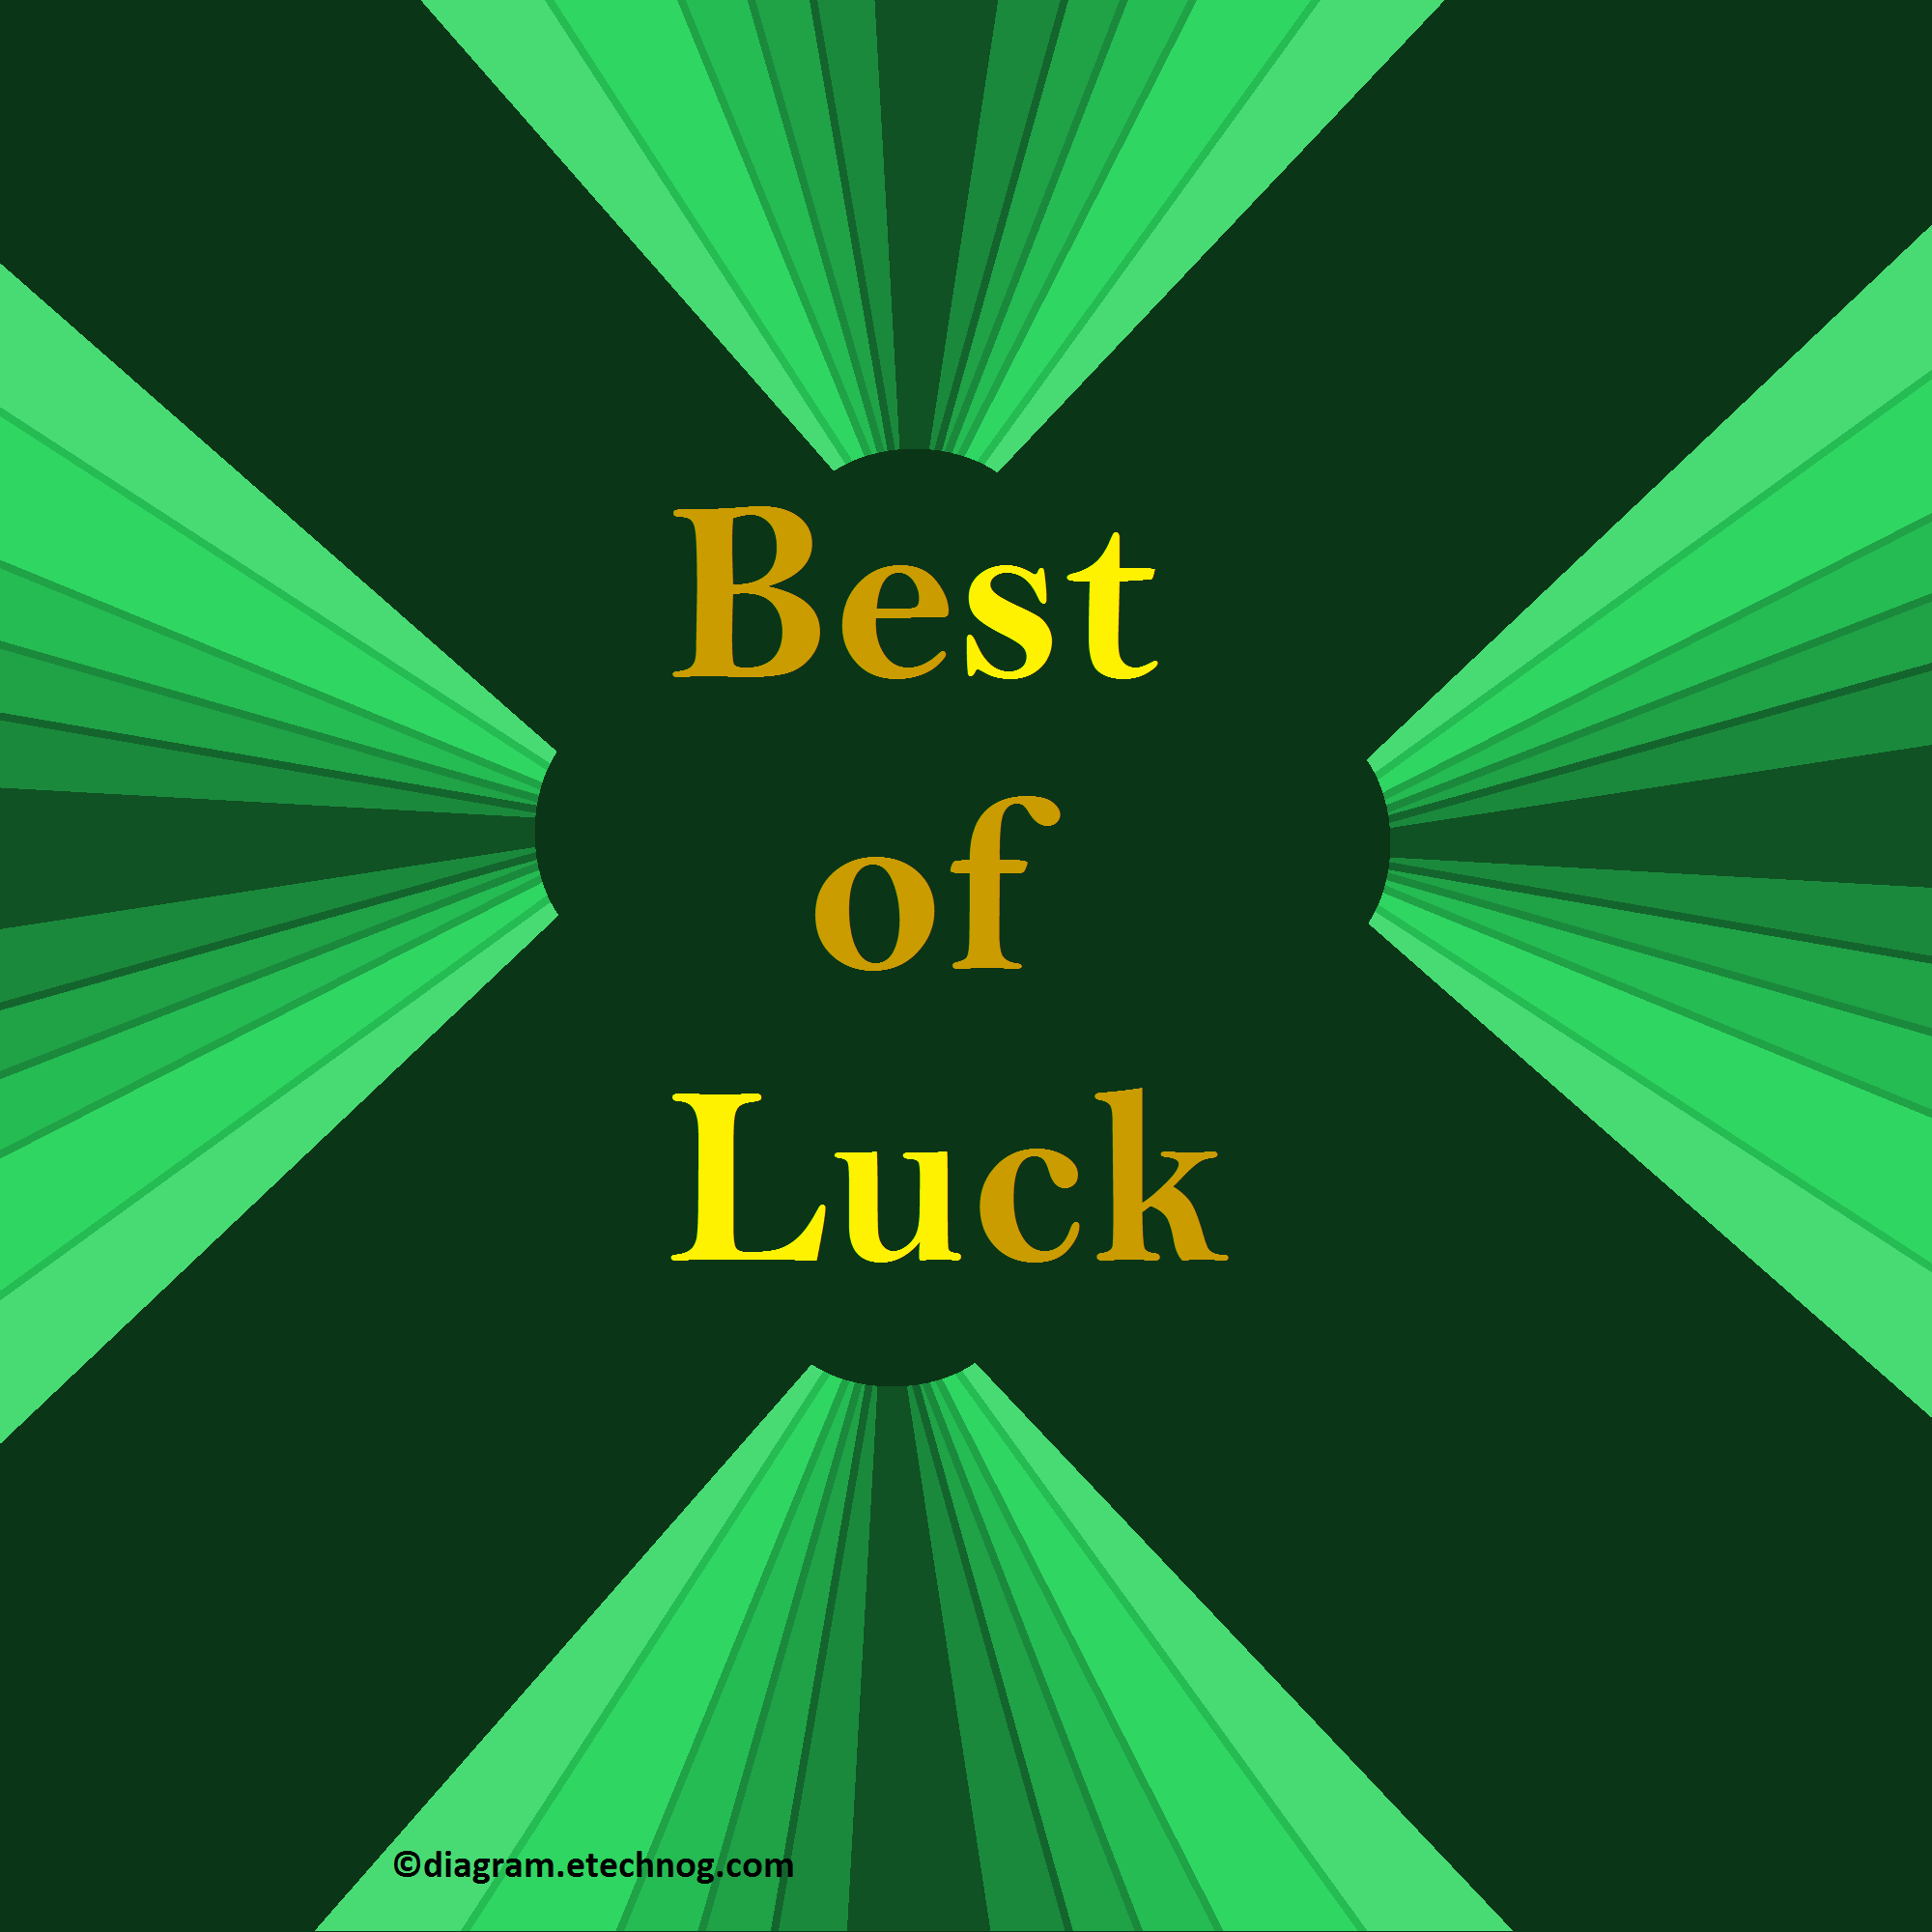 Best of Luck wish Image